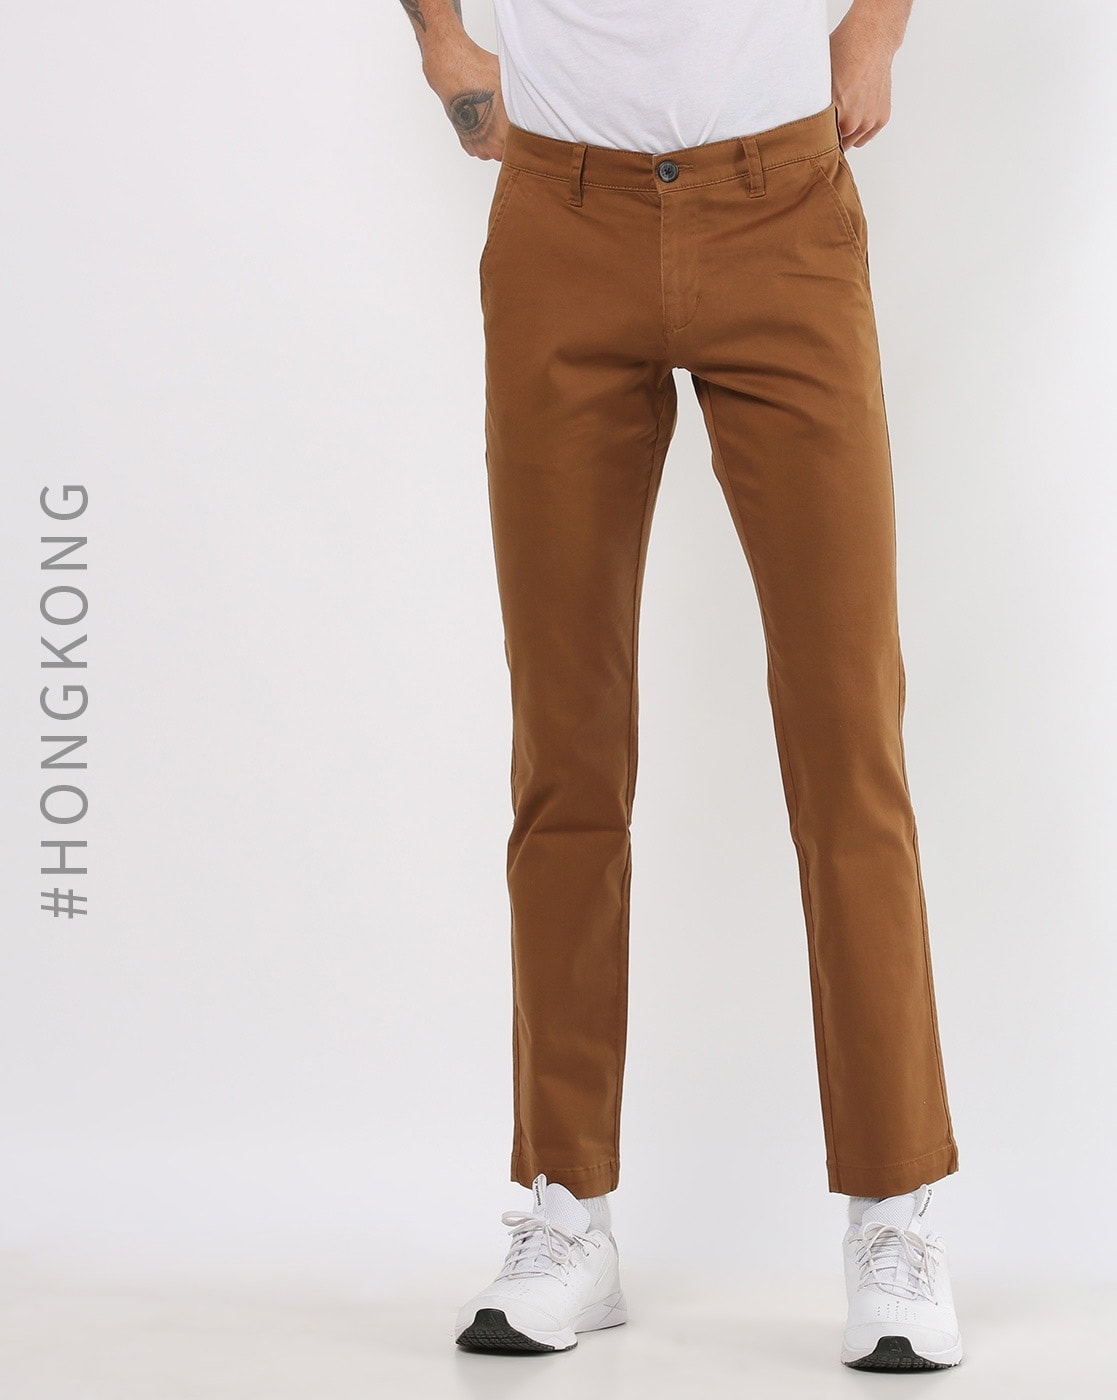 Buy Beige Trousers & Pants for Men by Plounge Online | Ajio.com